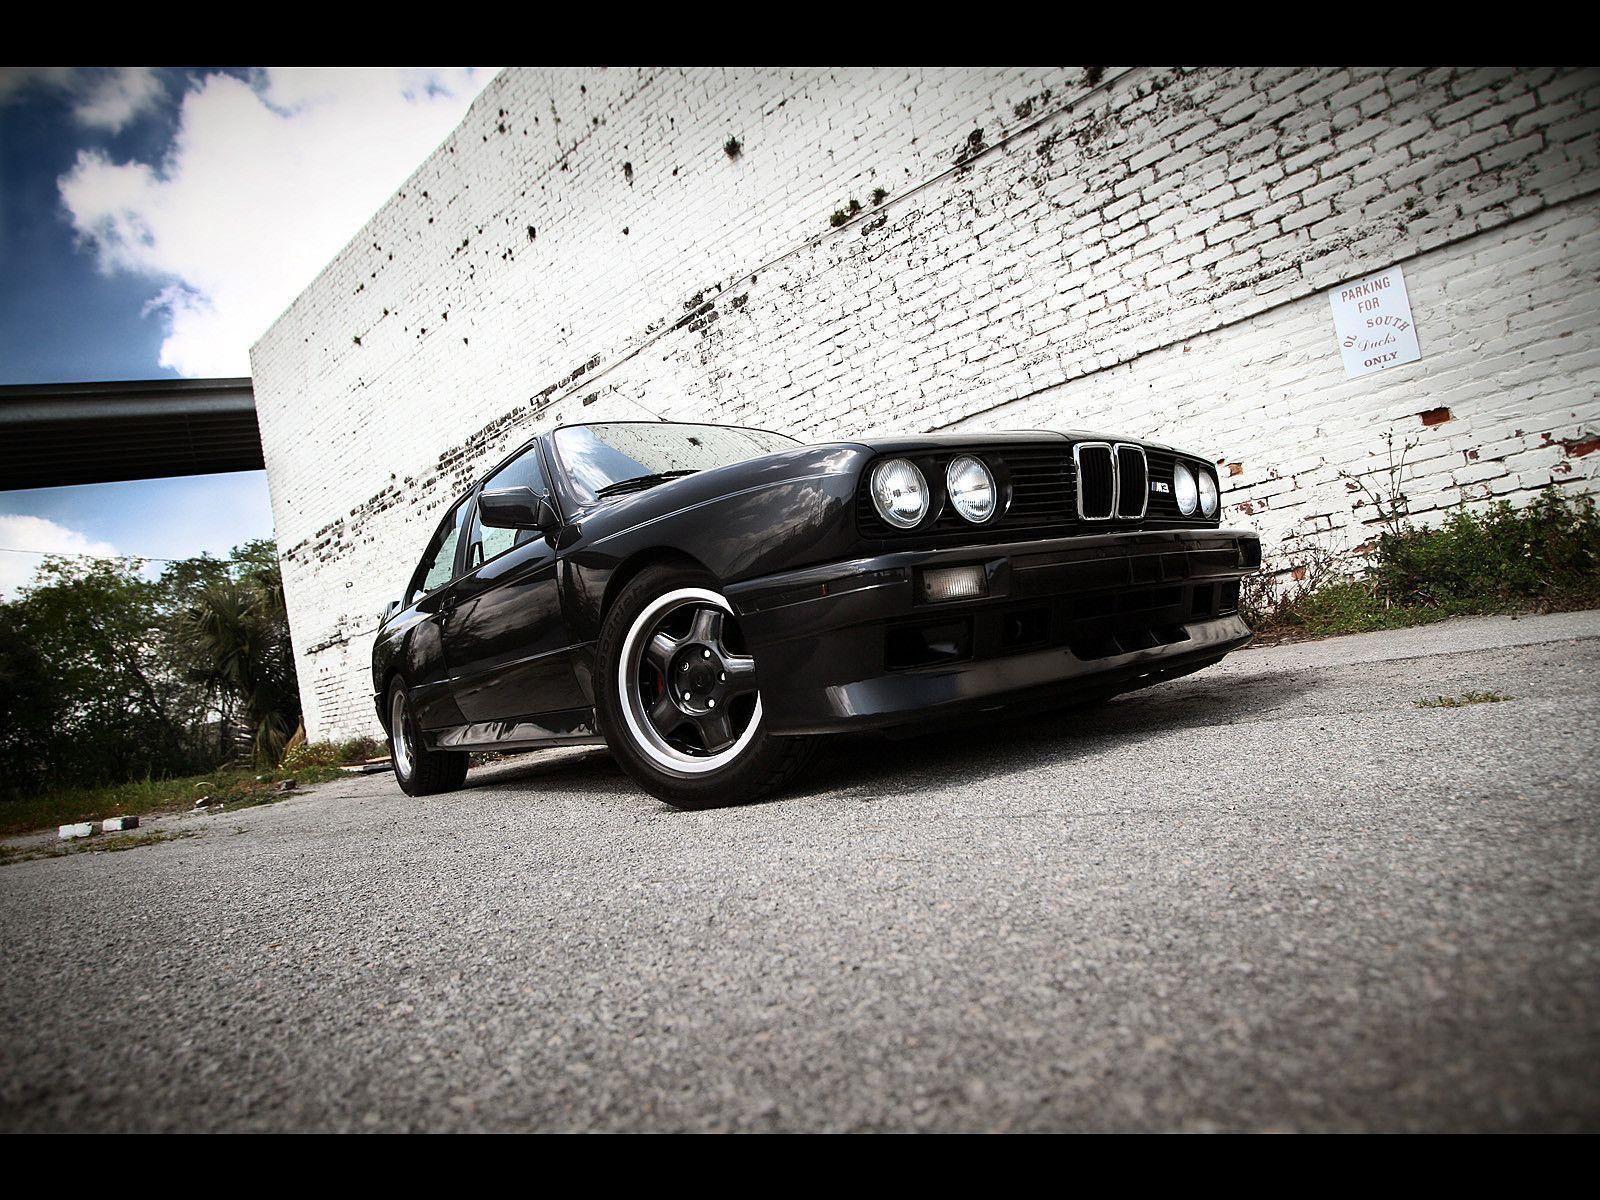 BMW M3 E30 photo with 31 pics. CarsBase.com